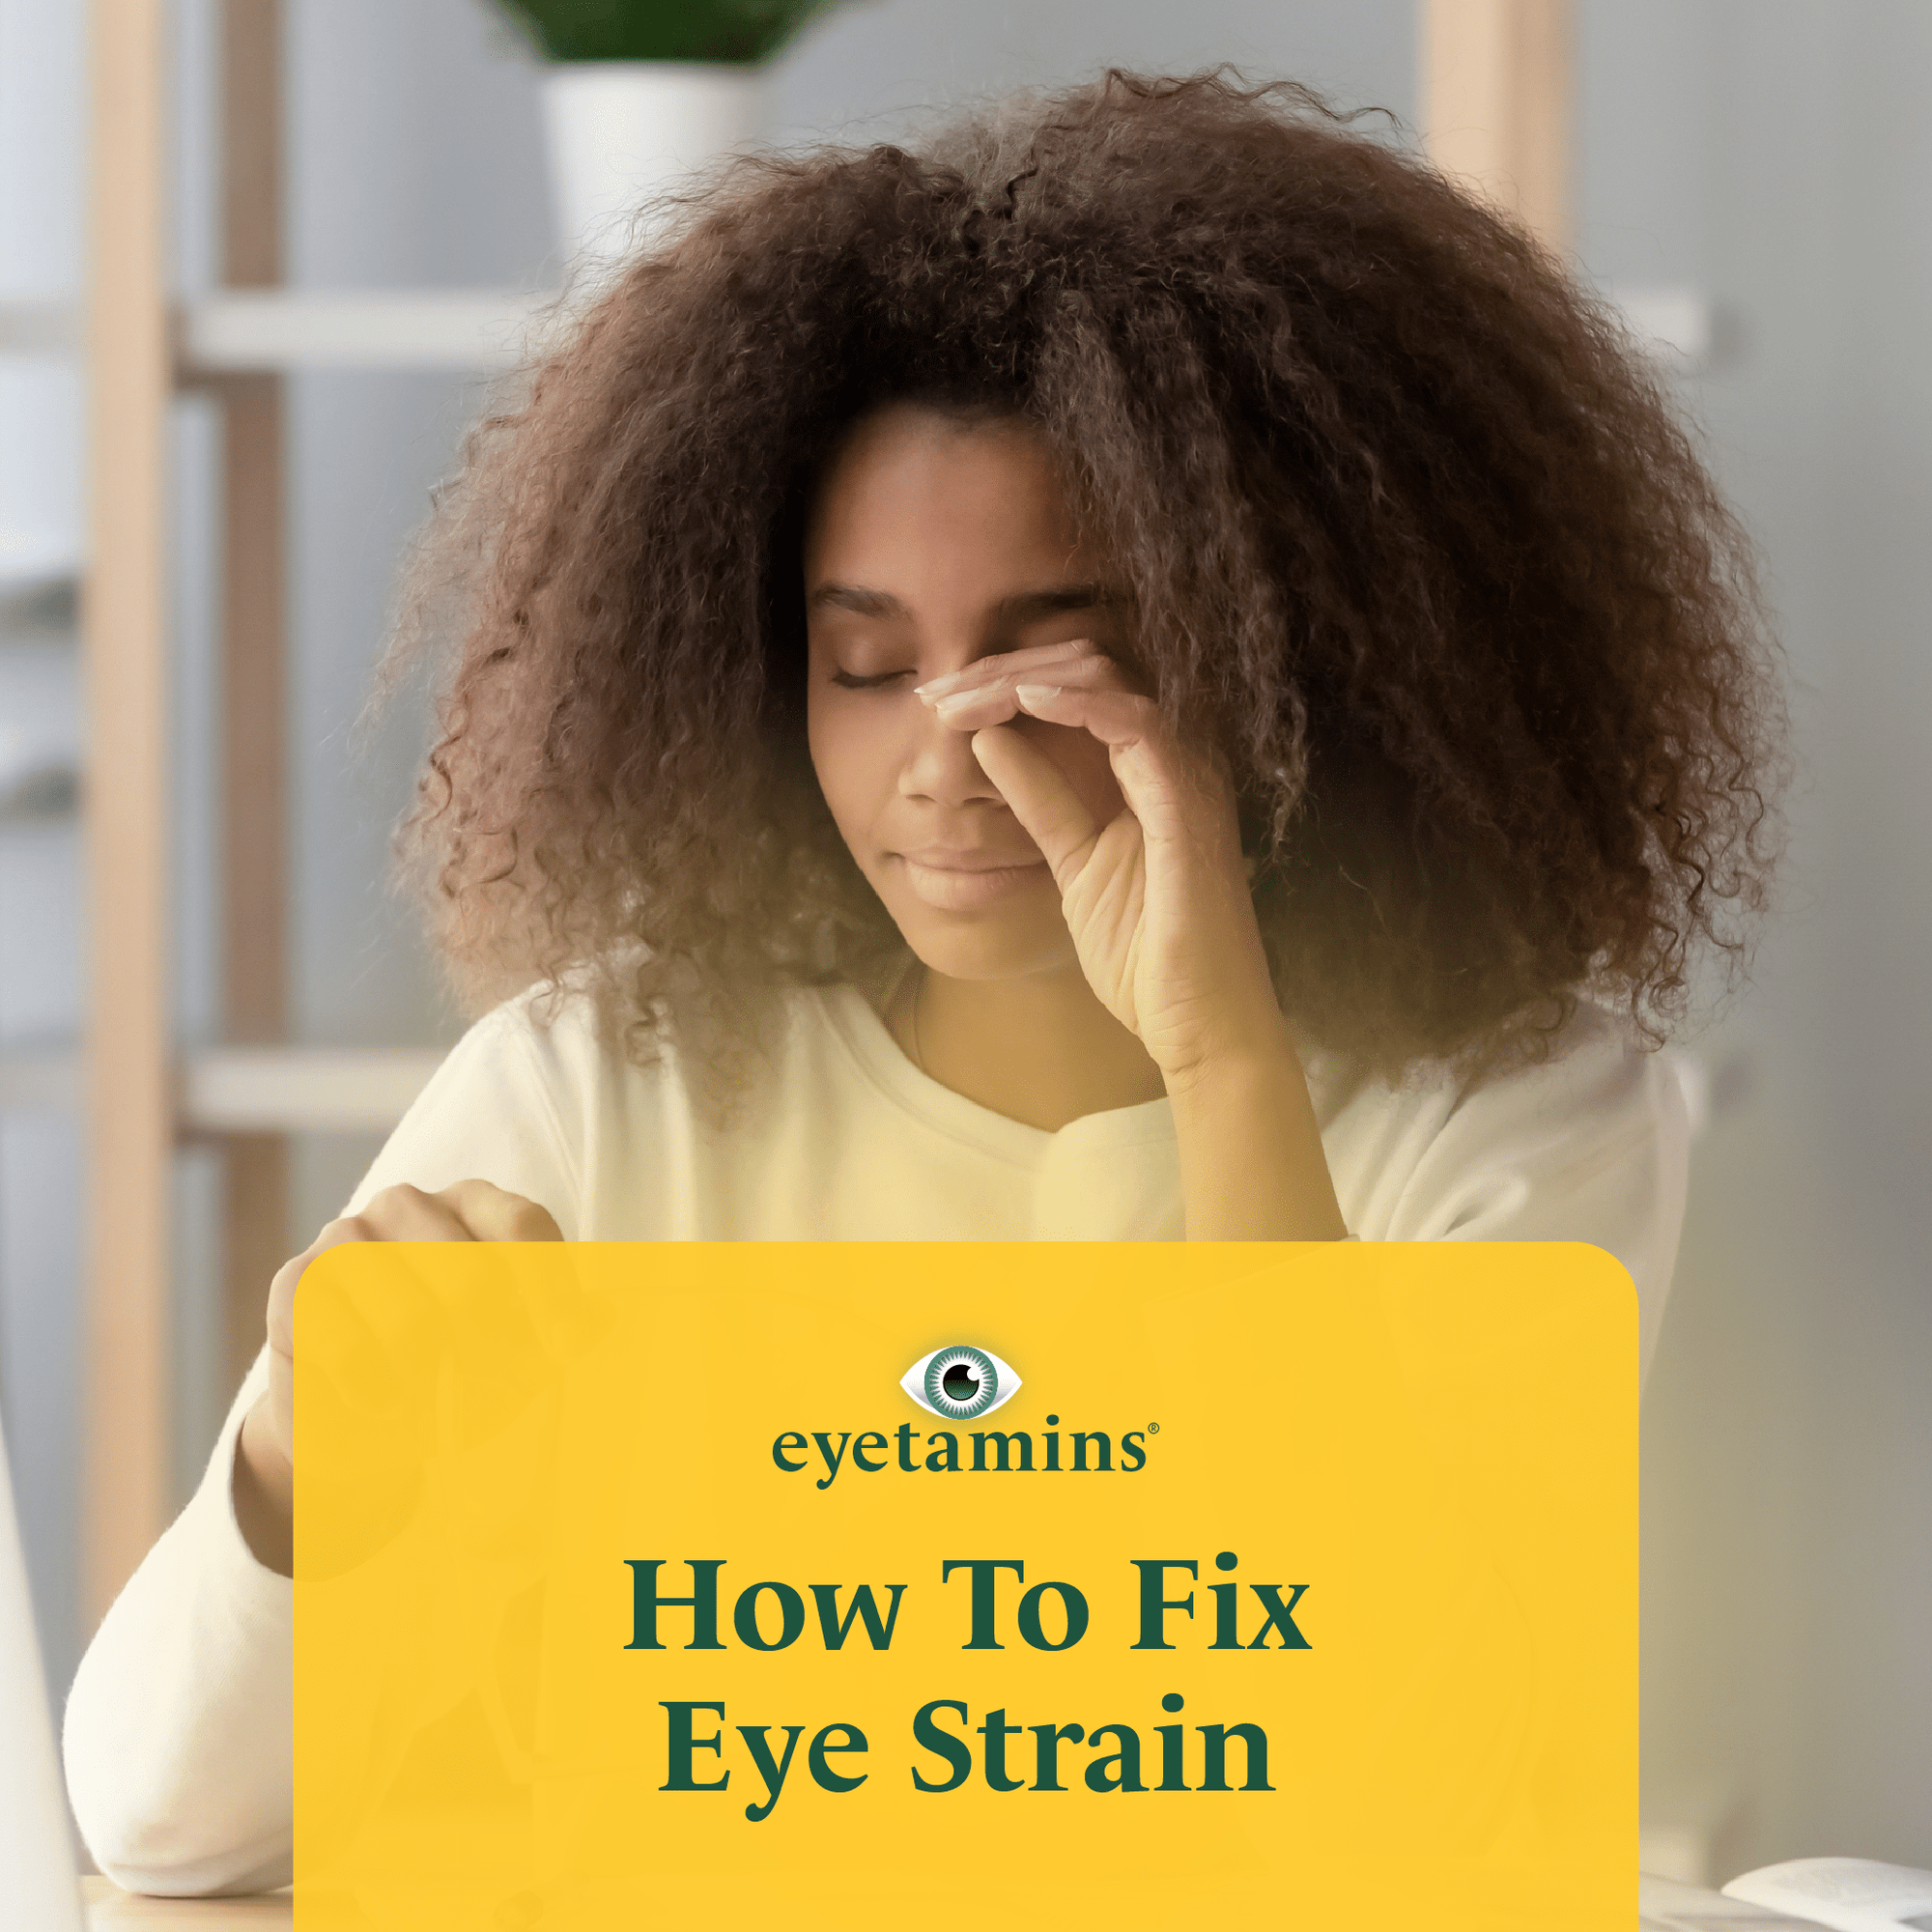 How to fix eye strain - Dr. Kaushal Explains